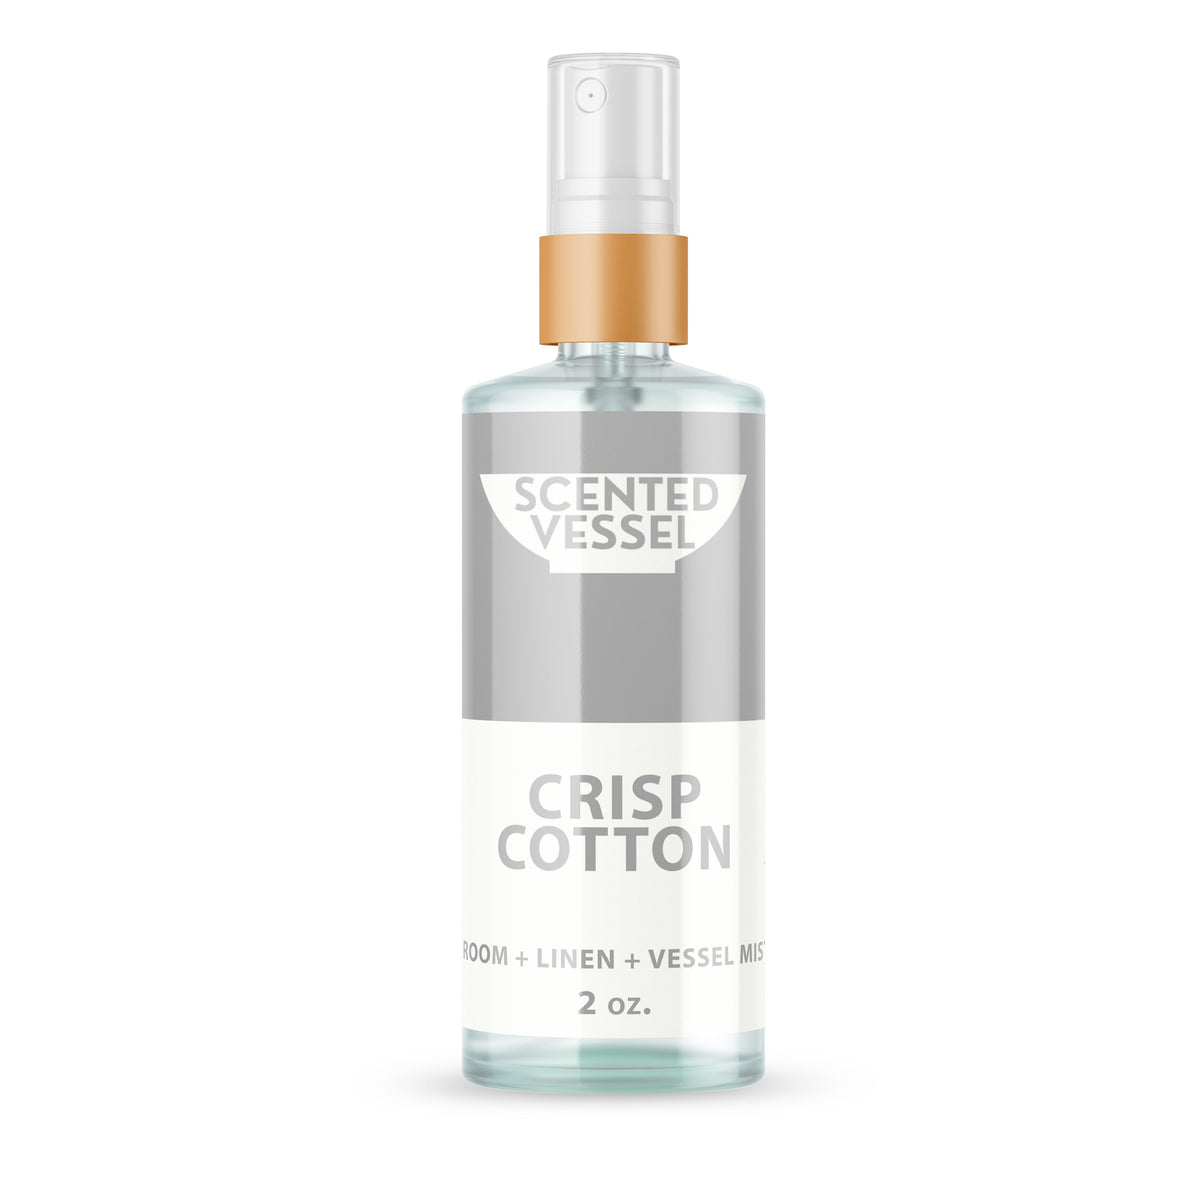 Crisp Cotton 2oz Fragrance Mist by Scented Vessel